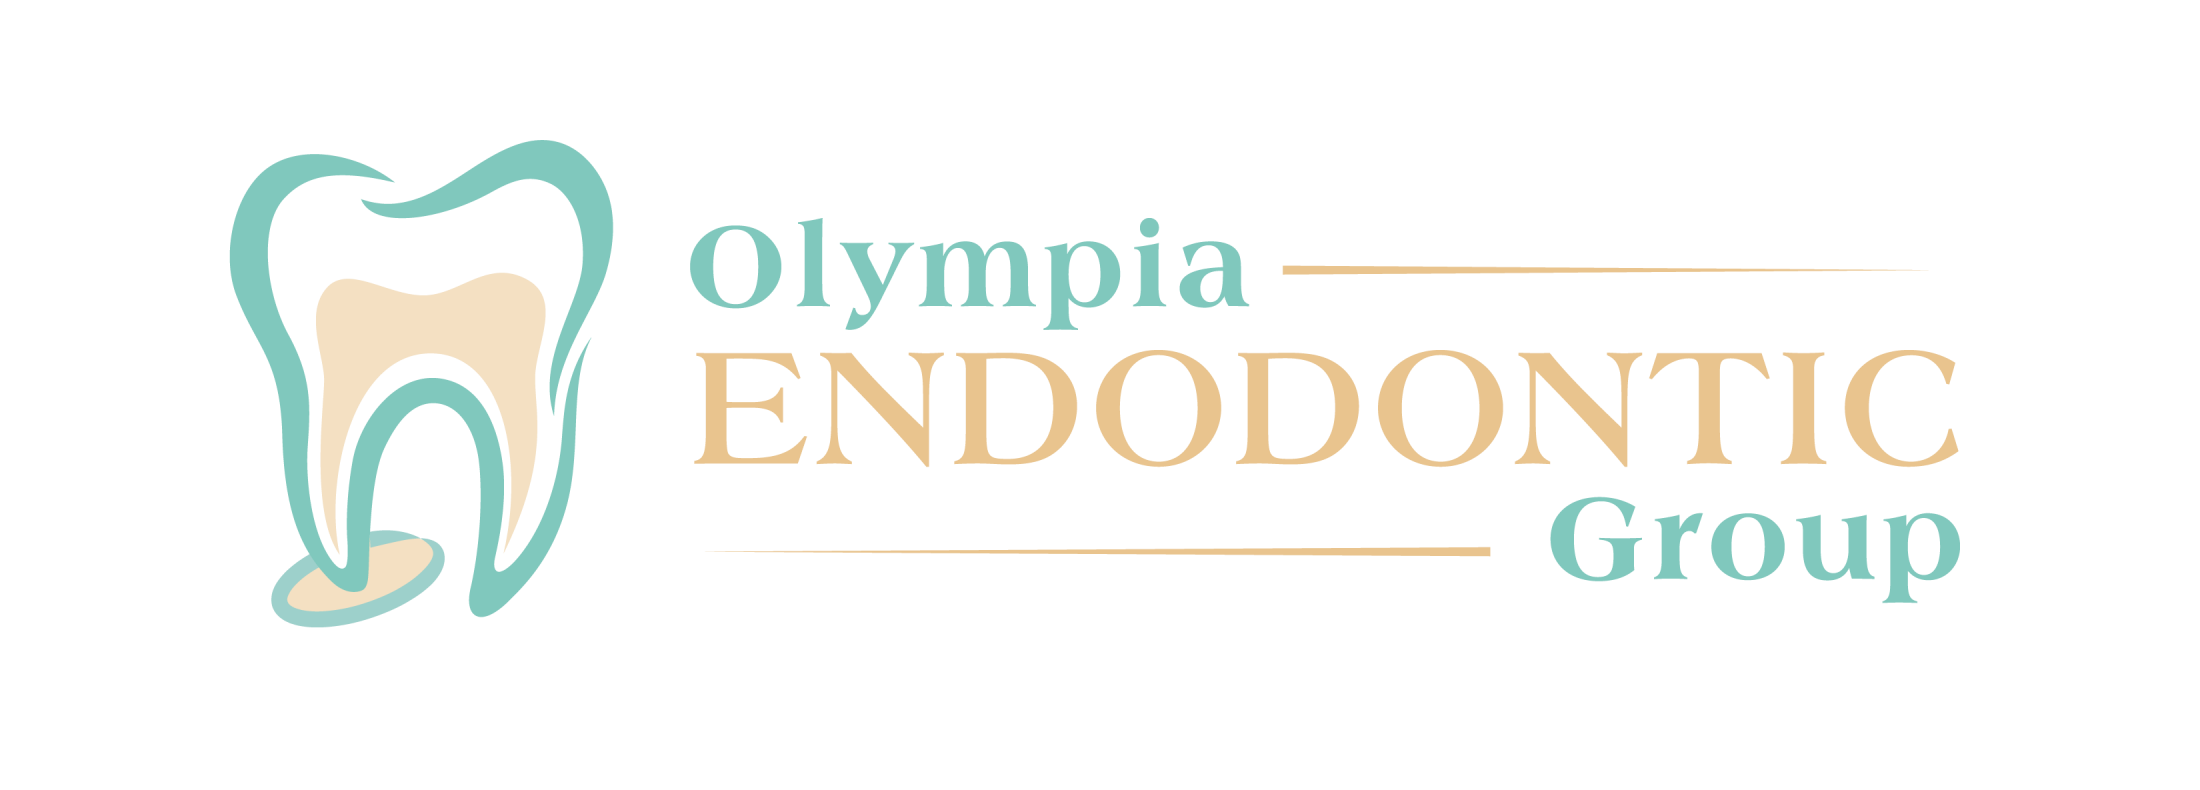 Olympia Endodontic Group